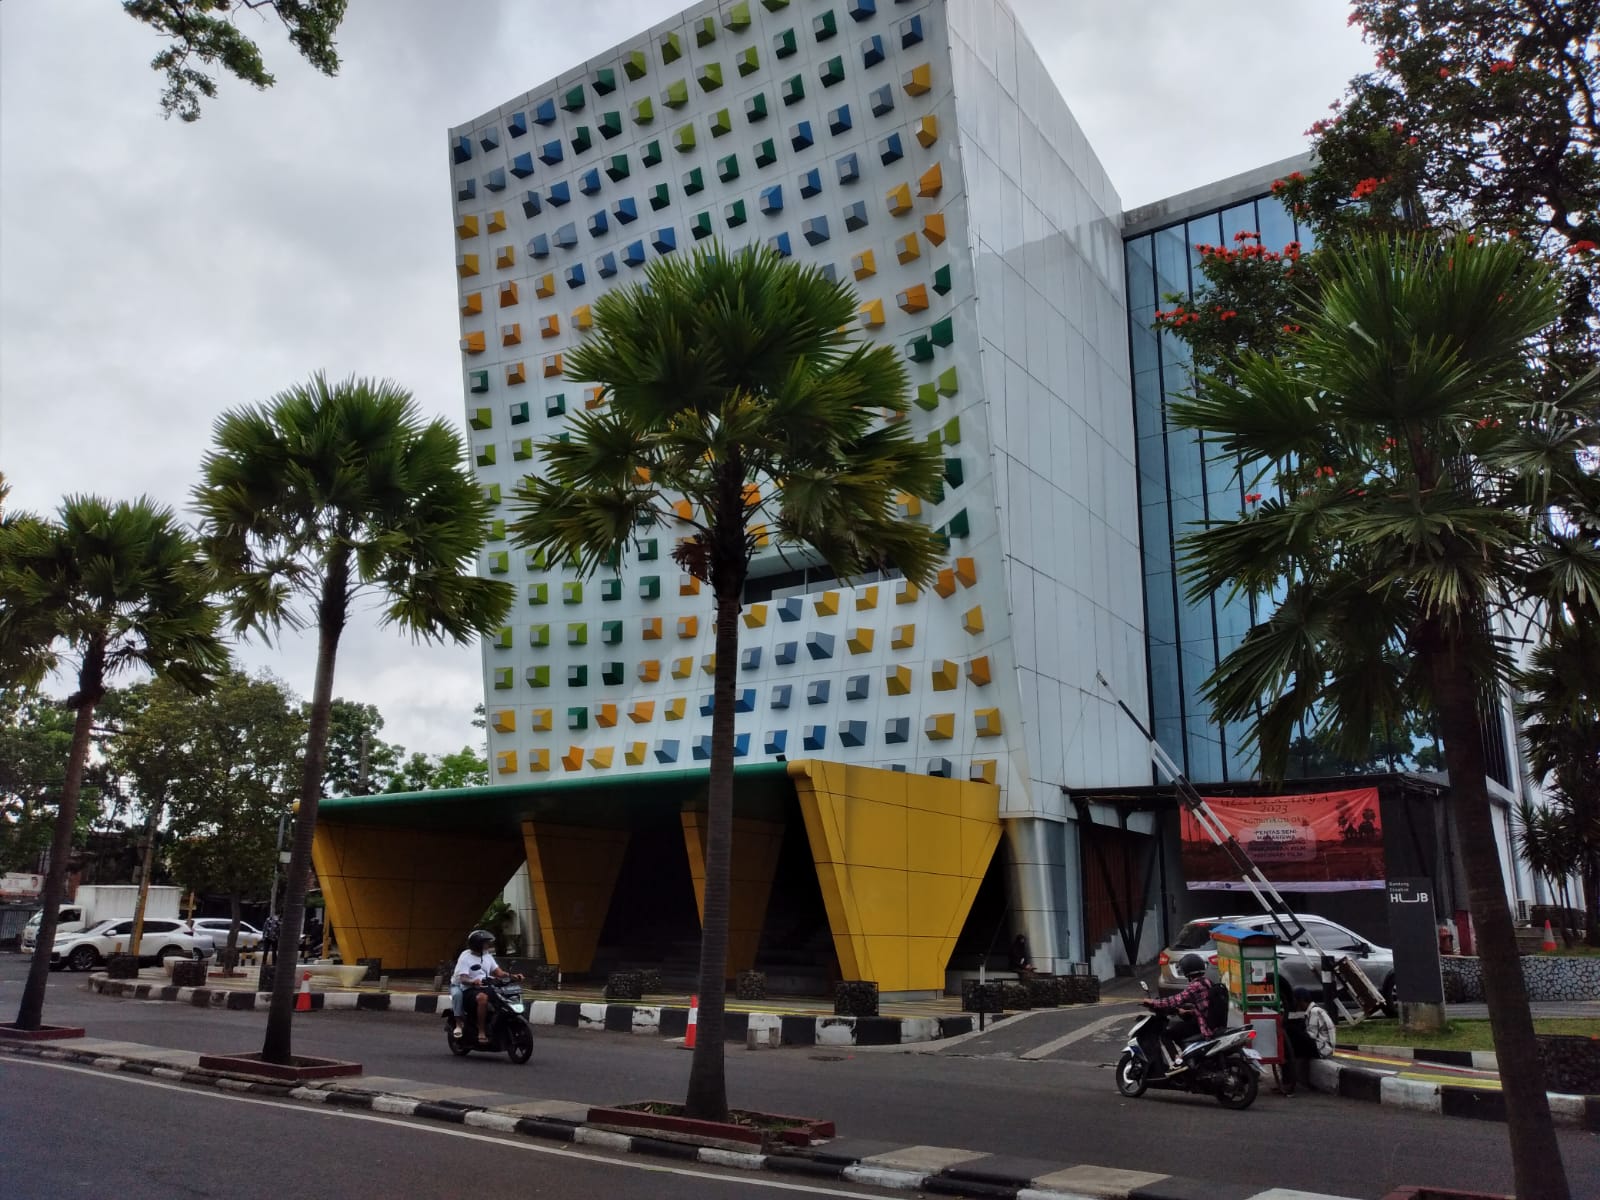 Gedung Bandung Creative Hub di Jalan Laswi Kota Bandung masih jadi andalan insan kreatif. (HENDRIK MUCHLISON/JABAR EKSPRES)